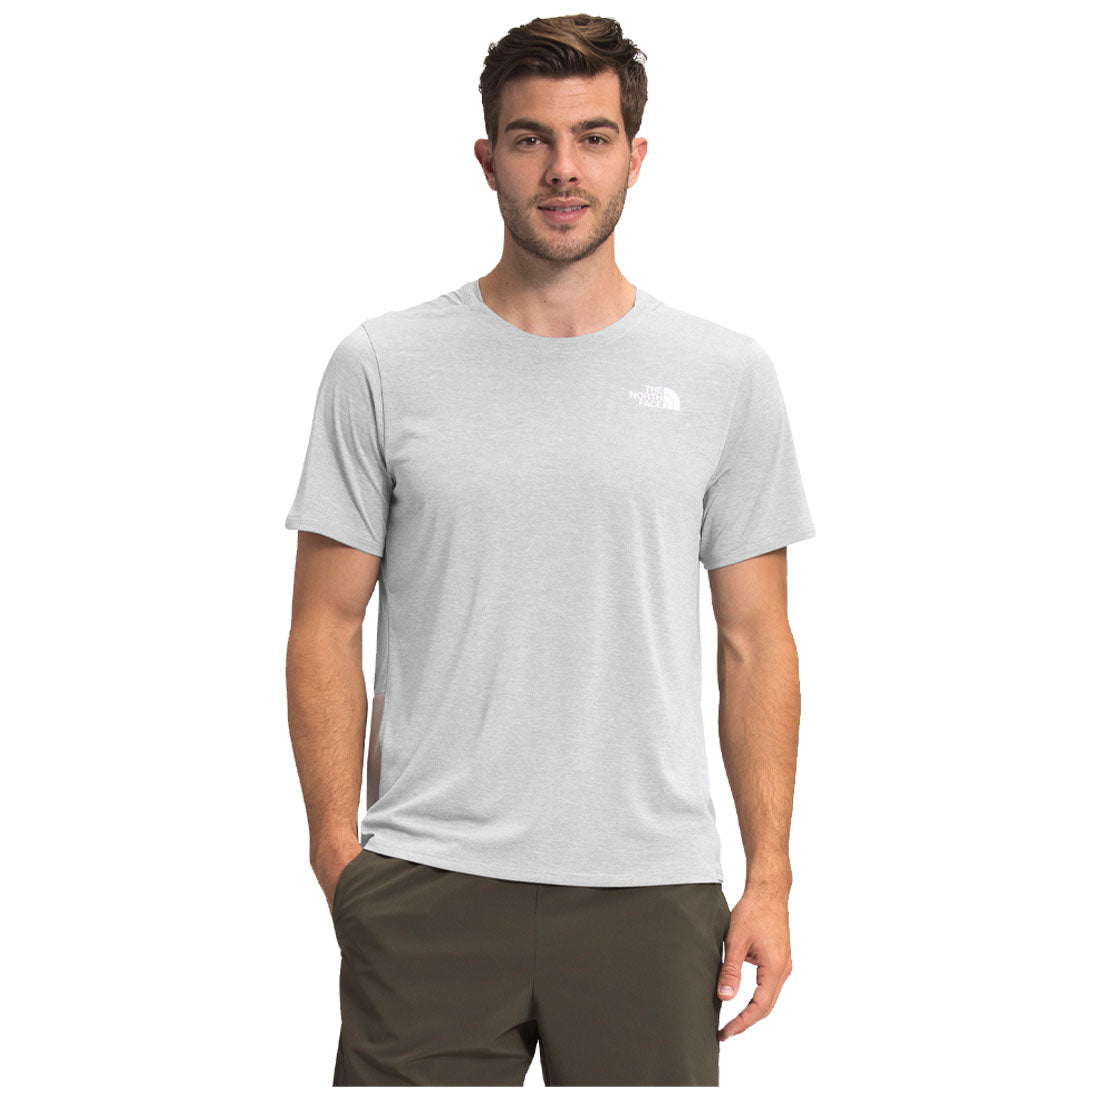 The North Face Bridger Short Sleeve Shirt - Men's